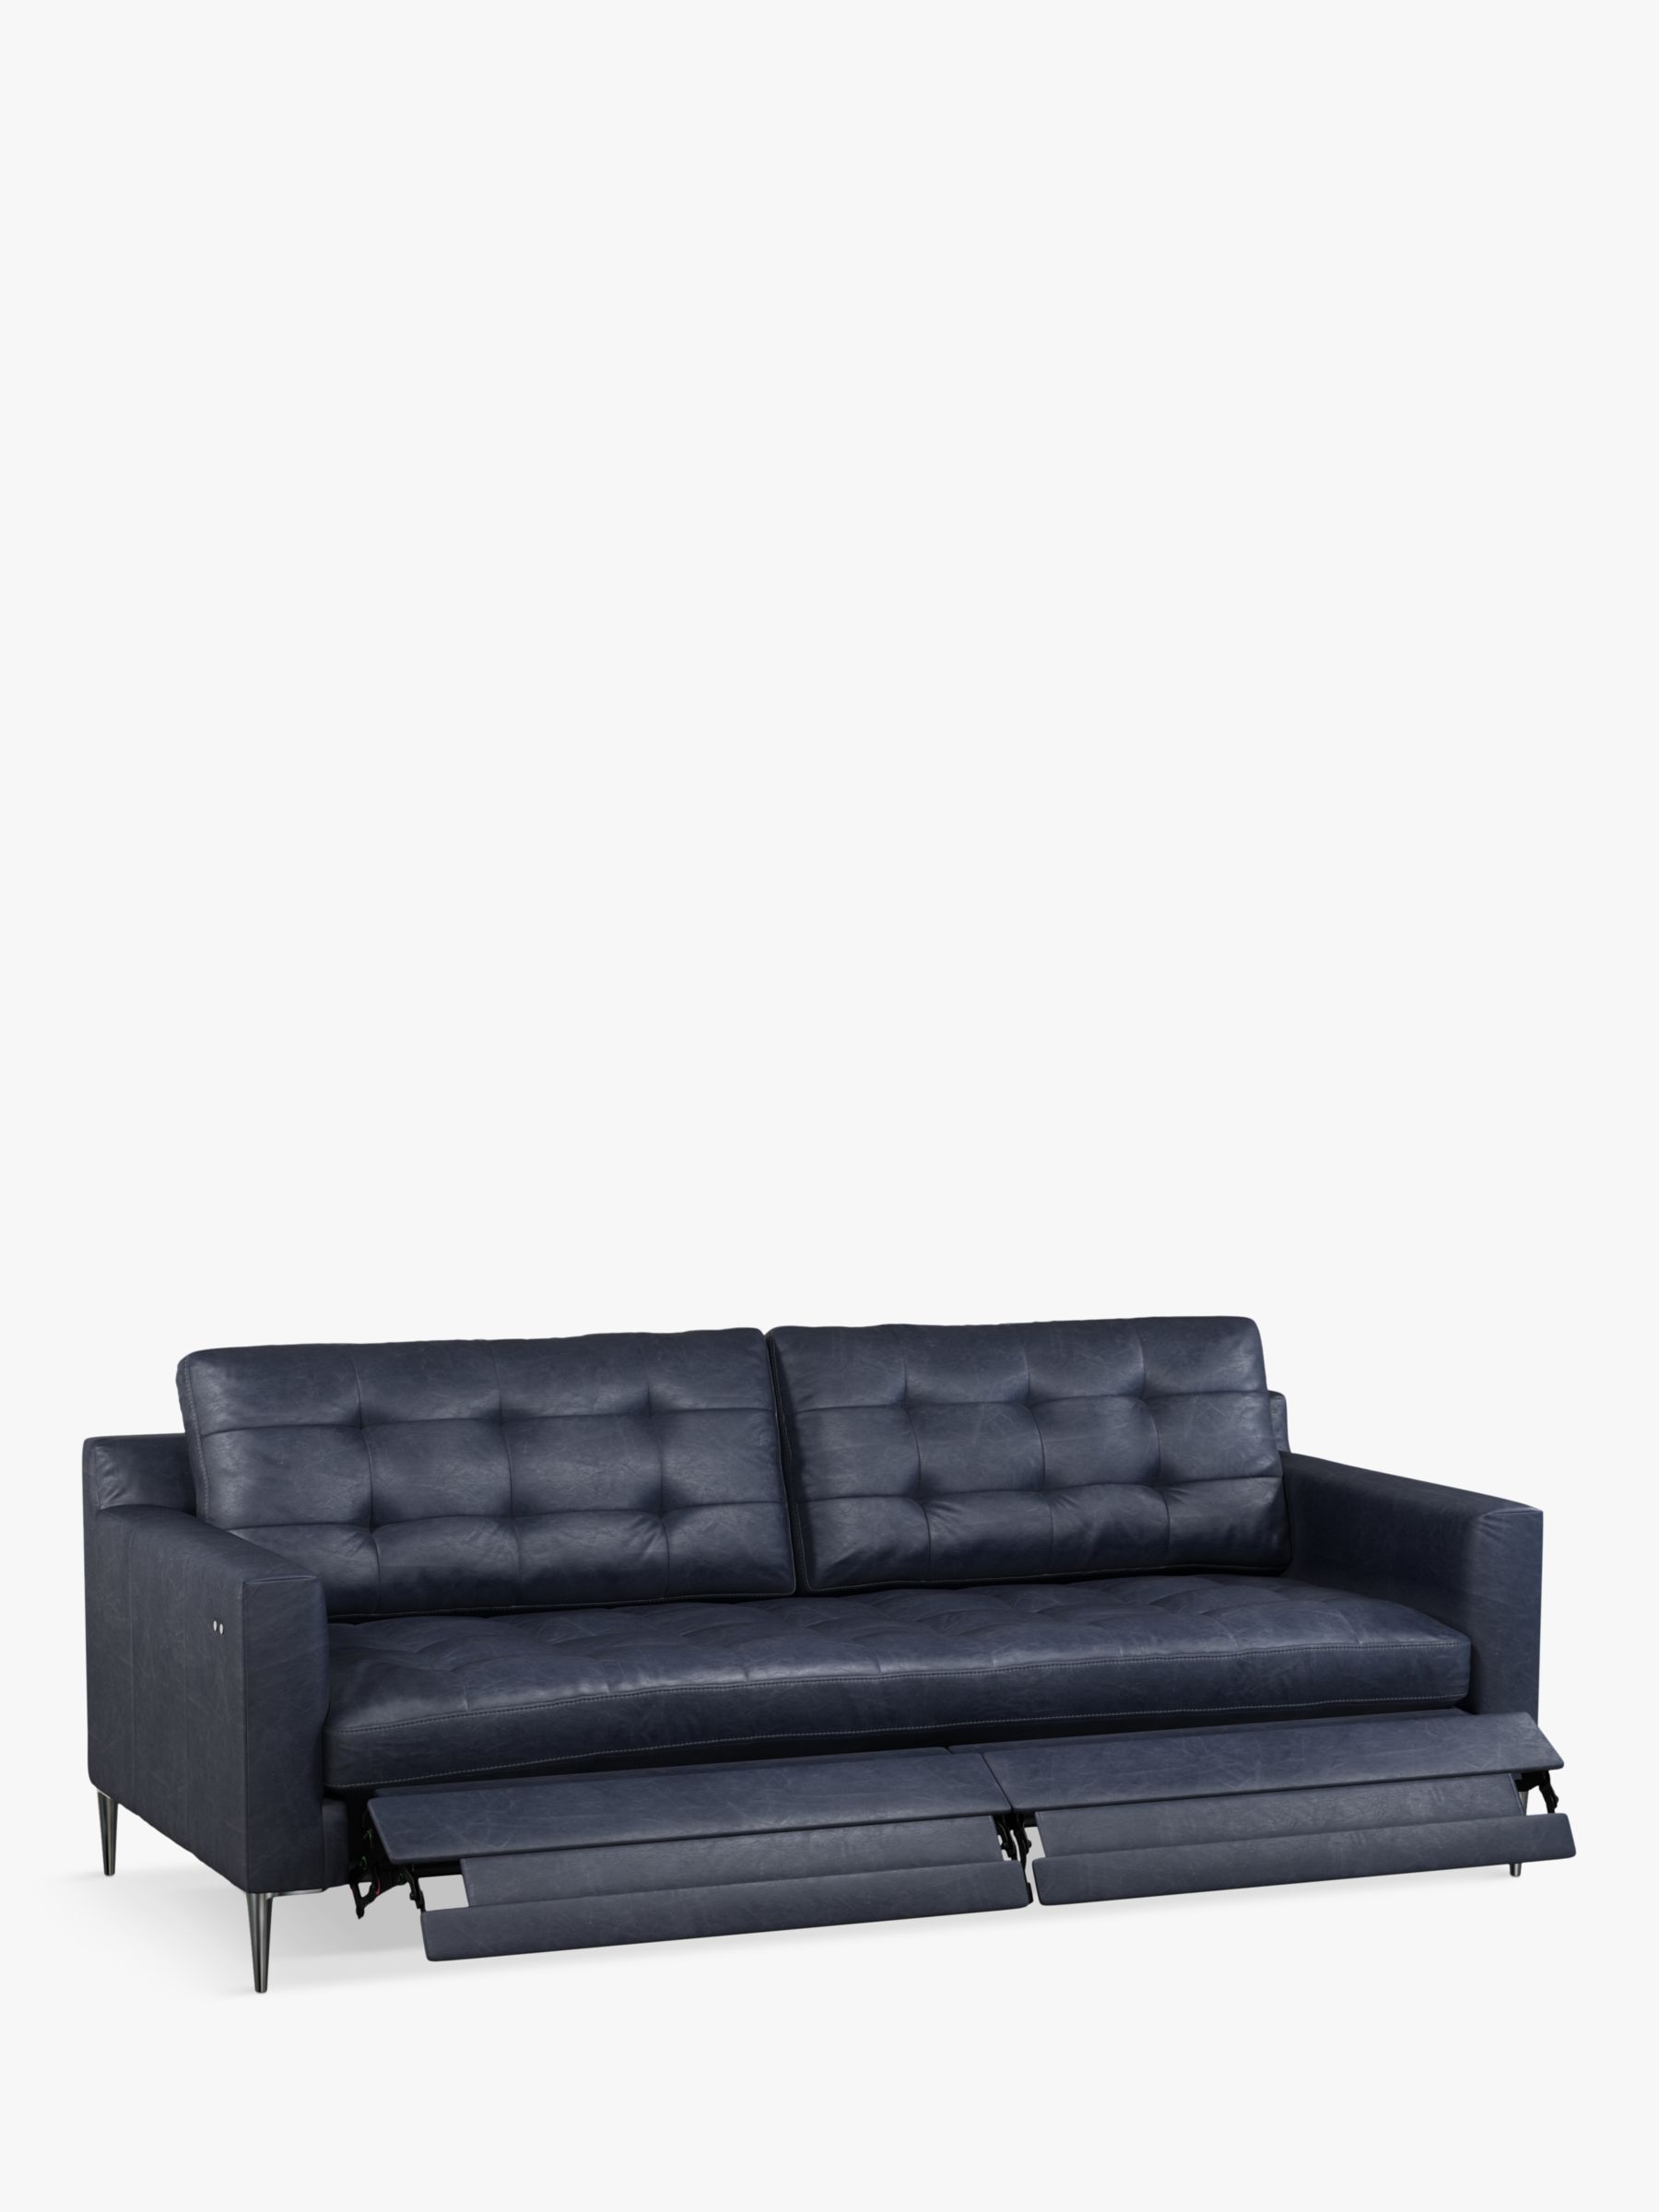 Draper Range, John Lewis Draper Motion Large 3 Seater Leather Sofa with Footrest Mechanism, Metal Leg, Sellvagio Blue